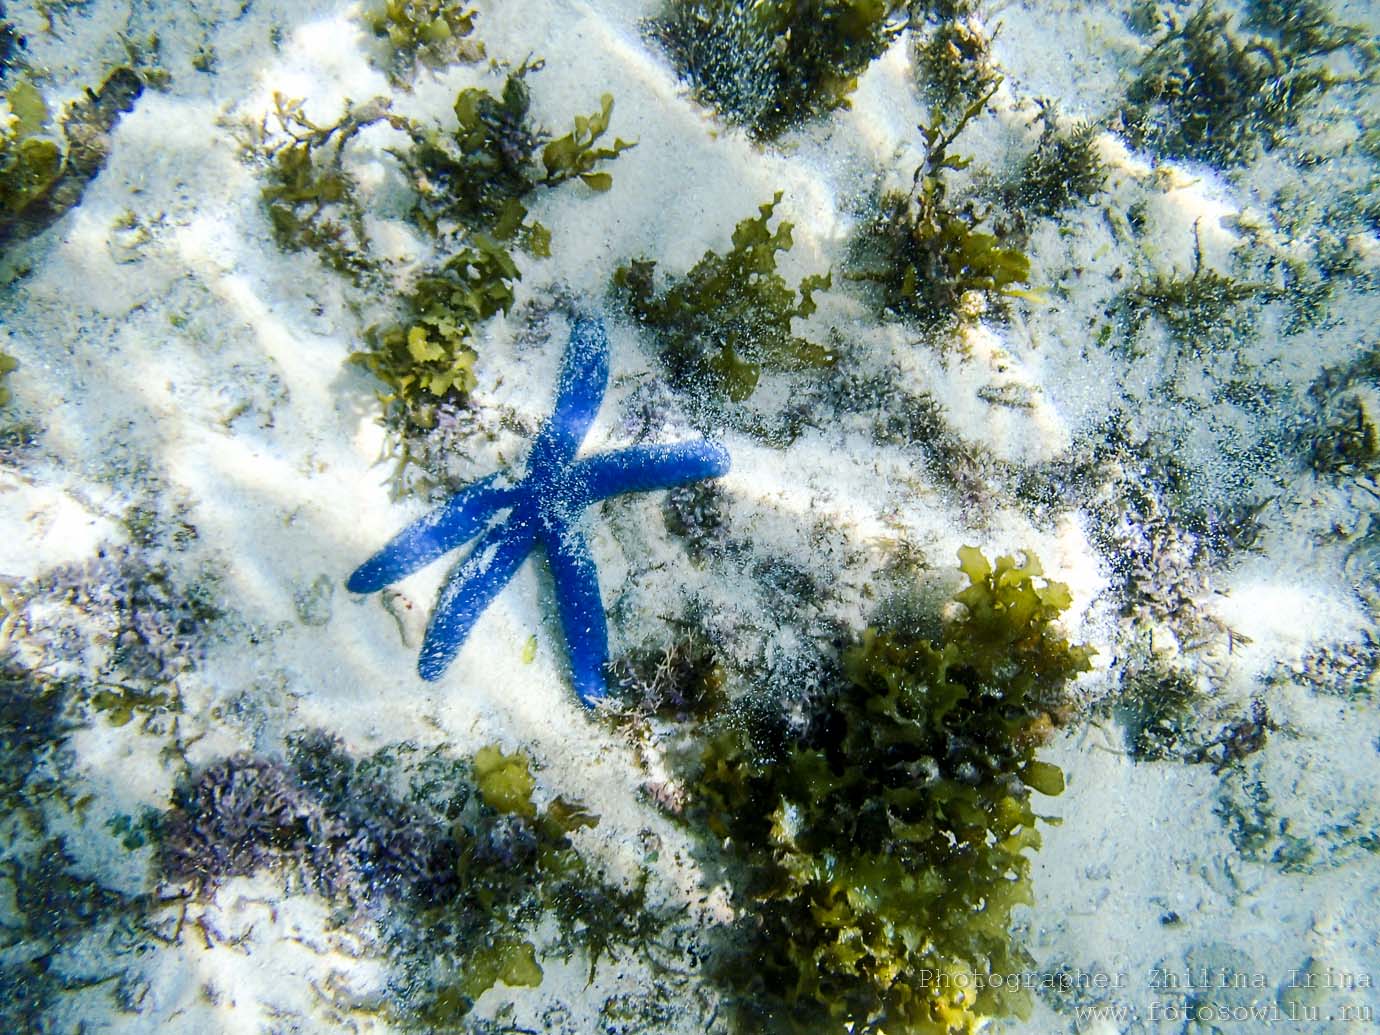 Алона Бич, Панглао, морские звезды, Филиппины, Alona beach